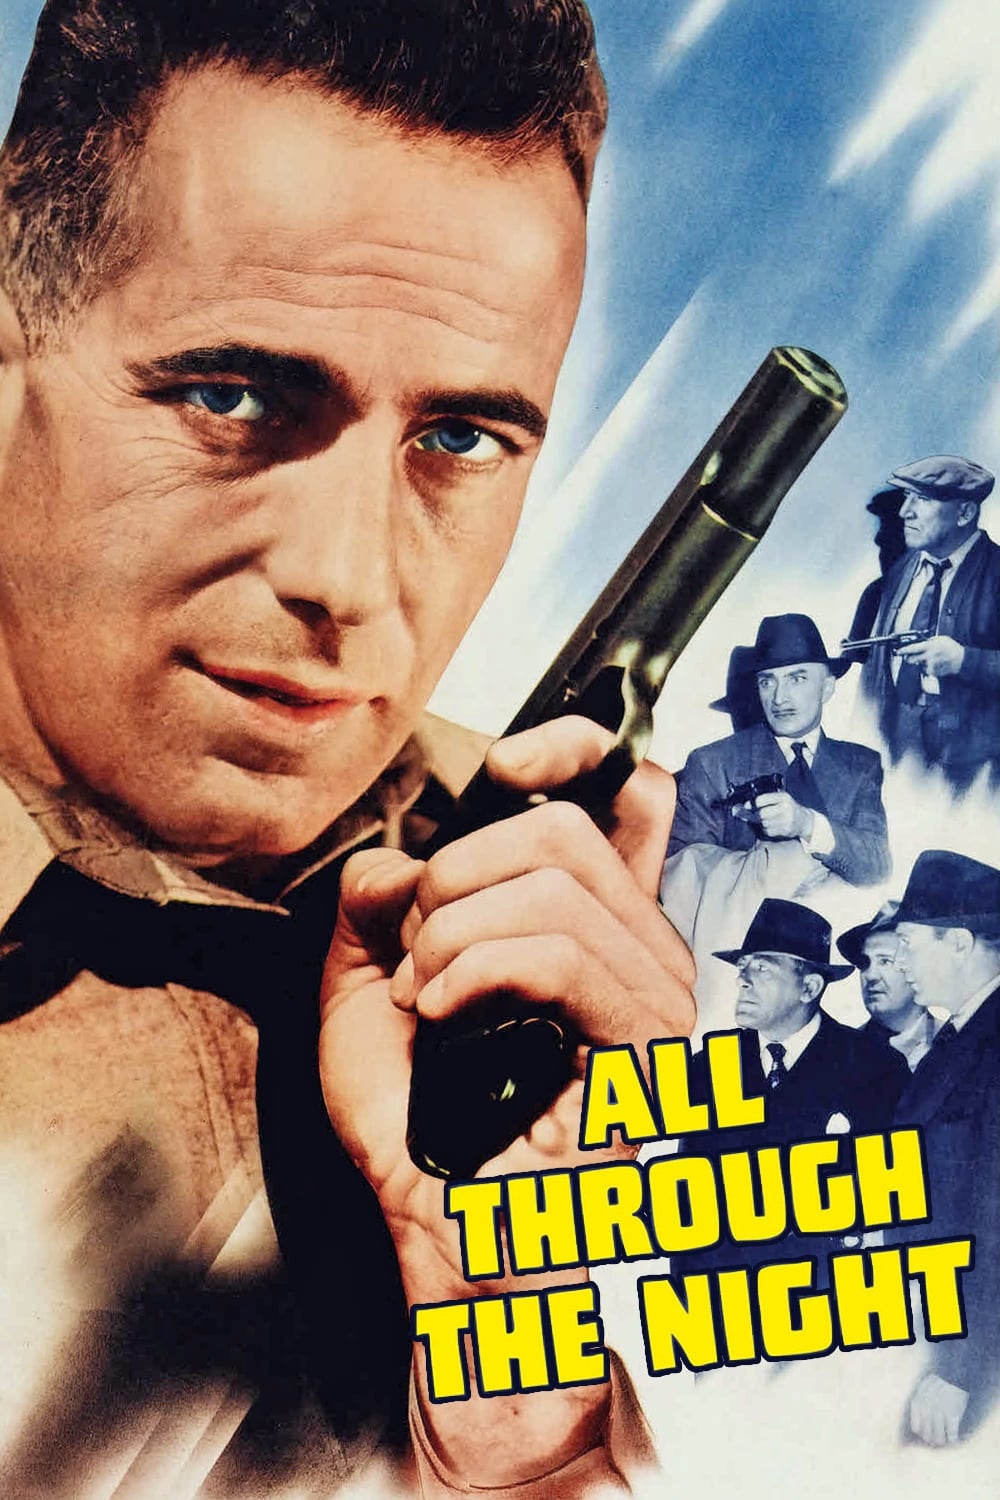 All Through the Night (1942)